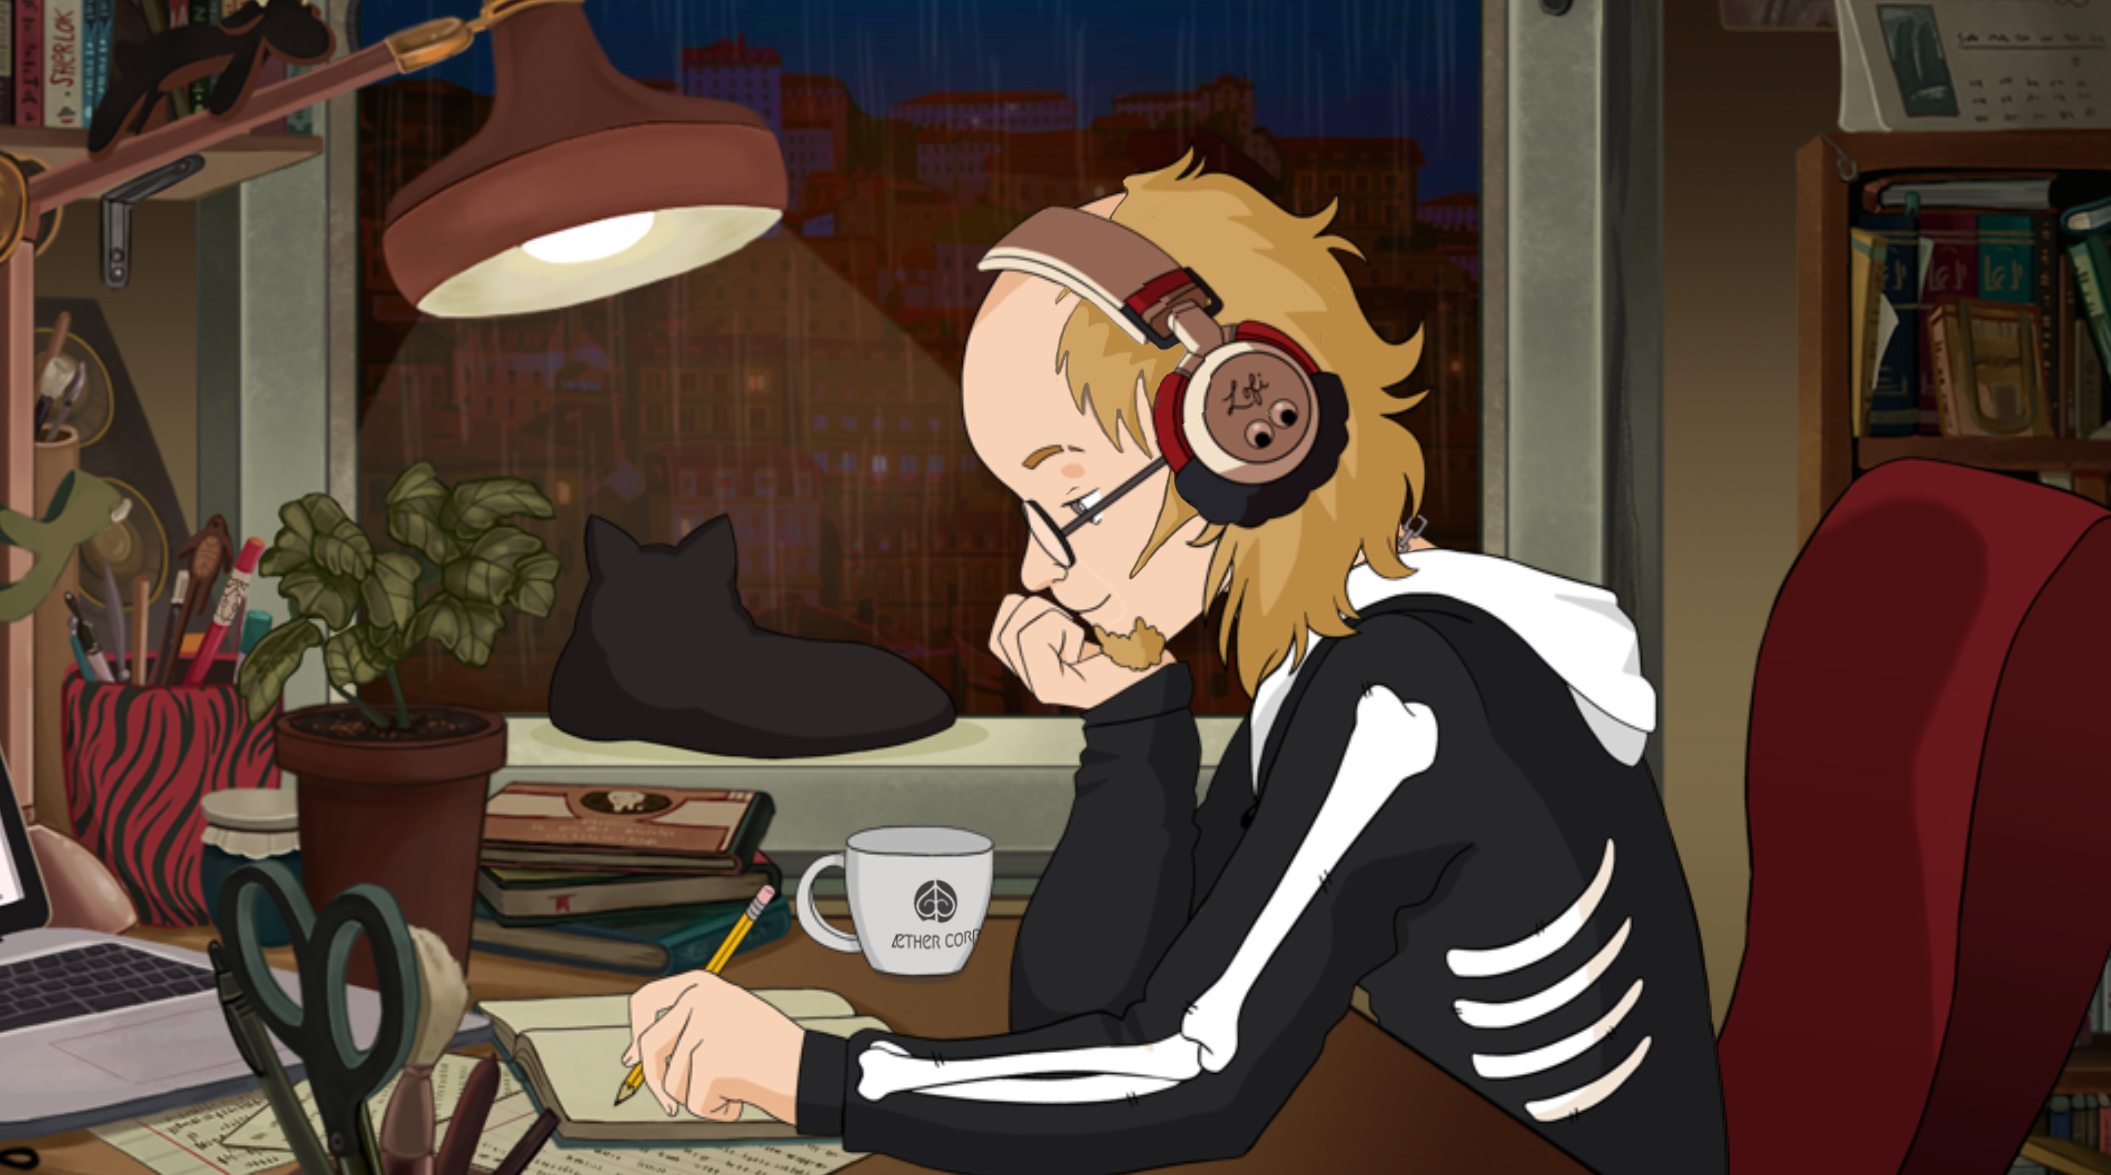 An anime style cartoon of Luke with headphones writing at a desk looking very similar to lofigirl